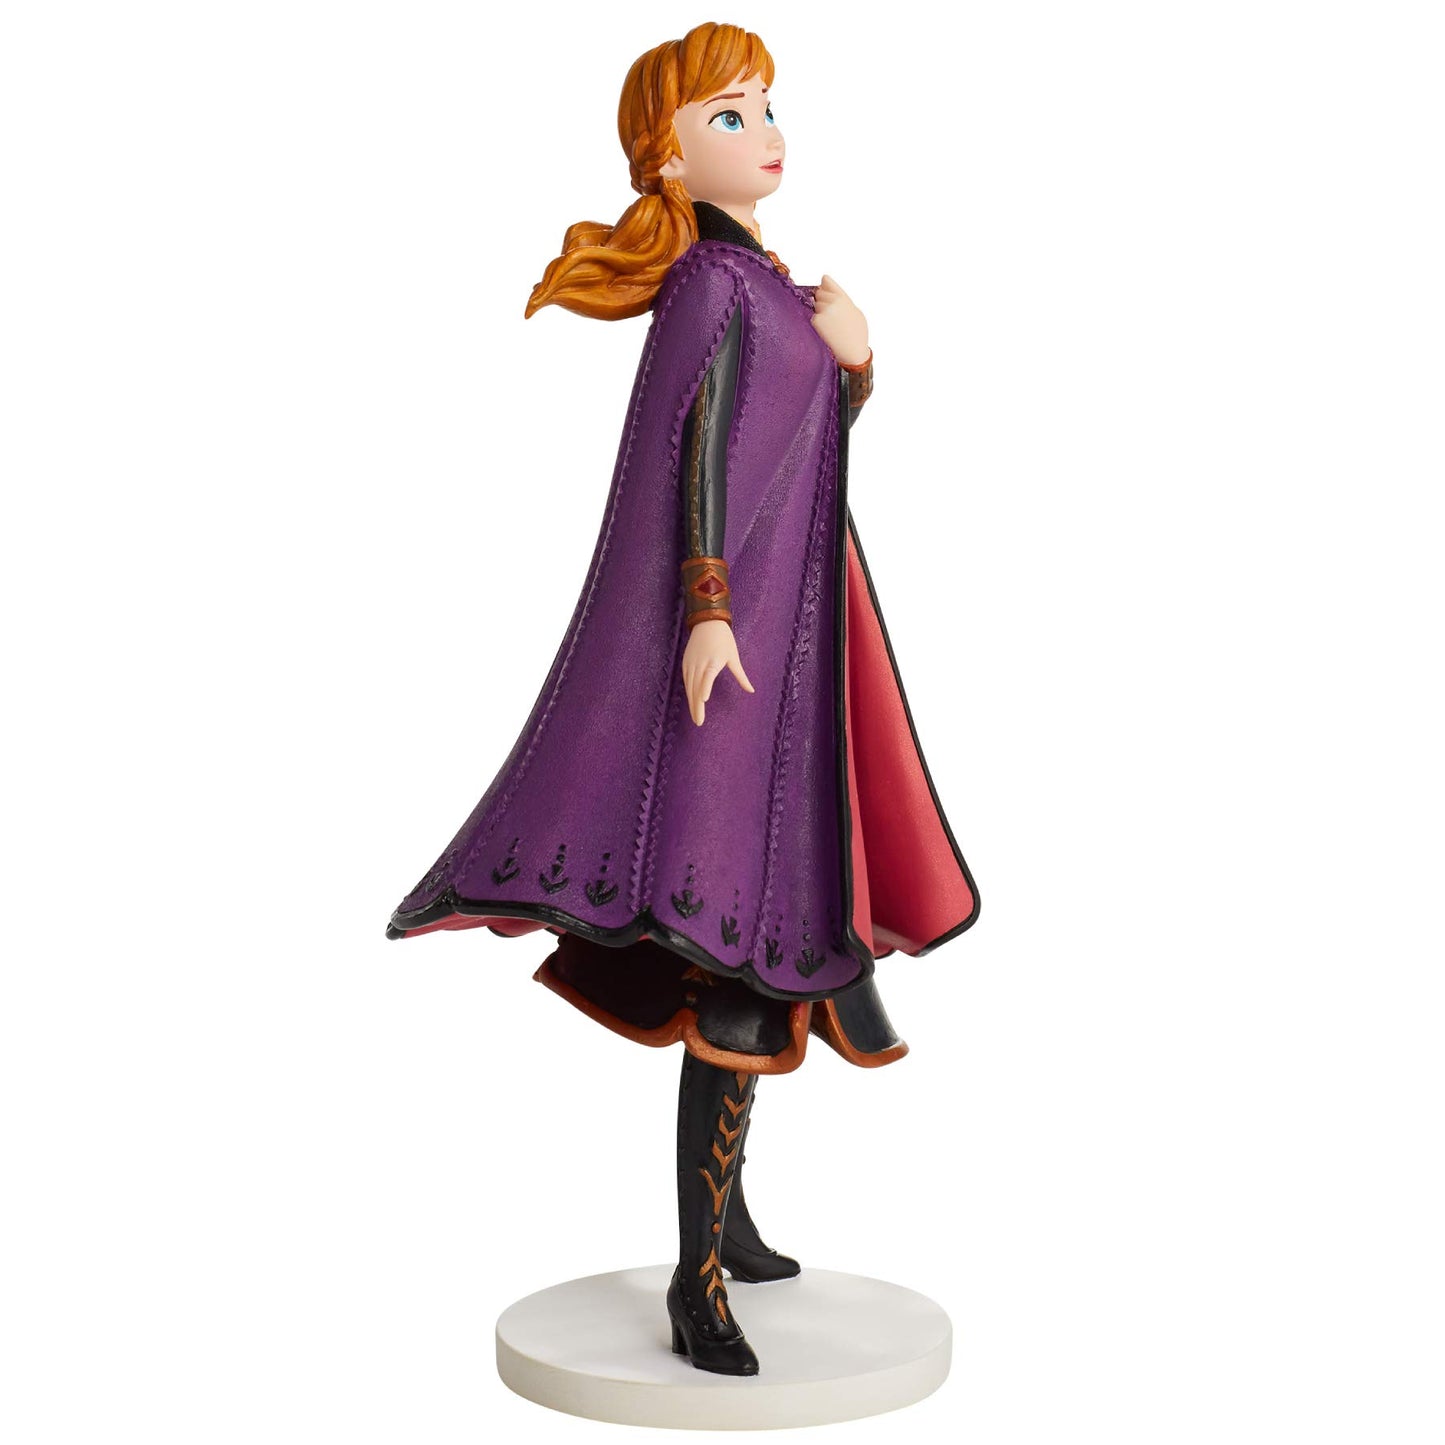 Anna Frozen II Cinematic Moment - Enesco Disney Showcase Collection Figurine from Enesco